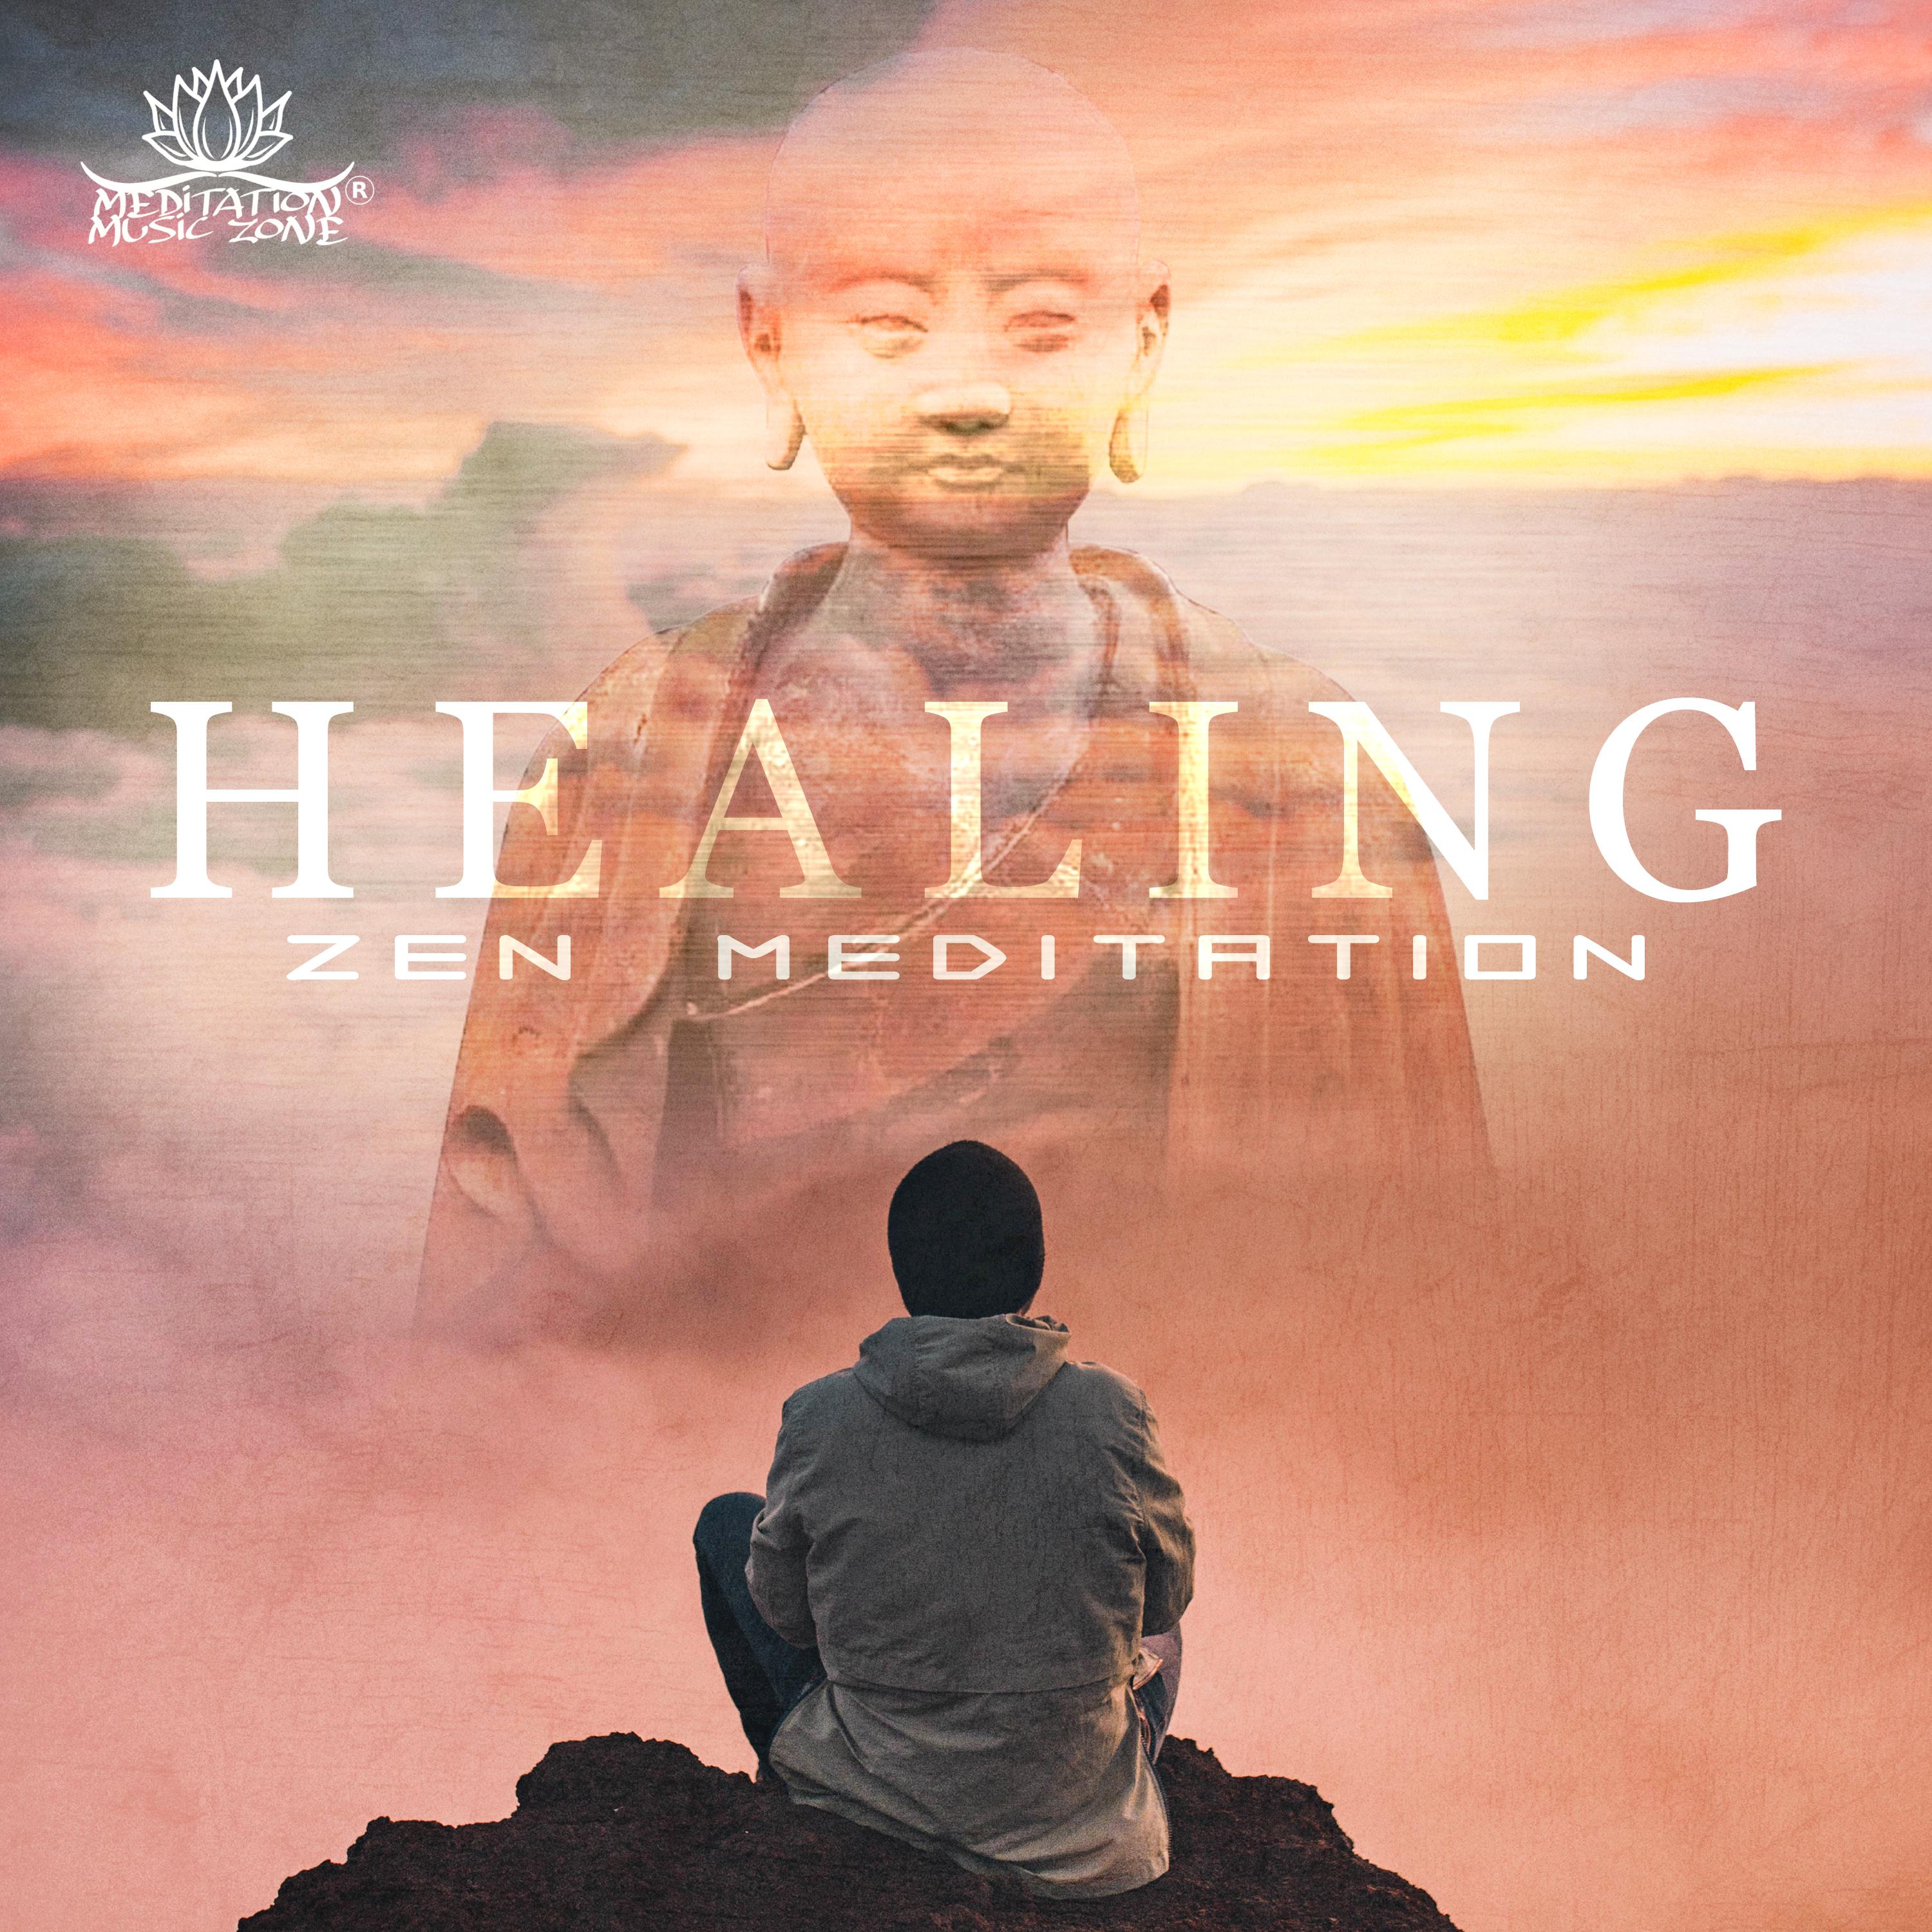 Healing Zen Meditation (Instrumental Music for OM Chanting, Reiki, Yoga, Sleep, Total Relaxing Music After Long Day, Deep Meditation)